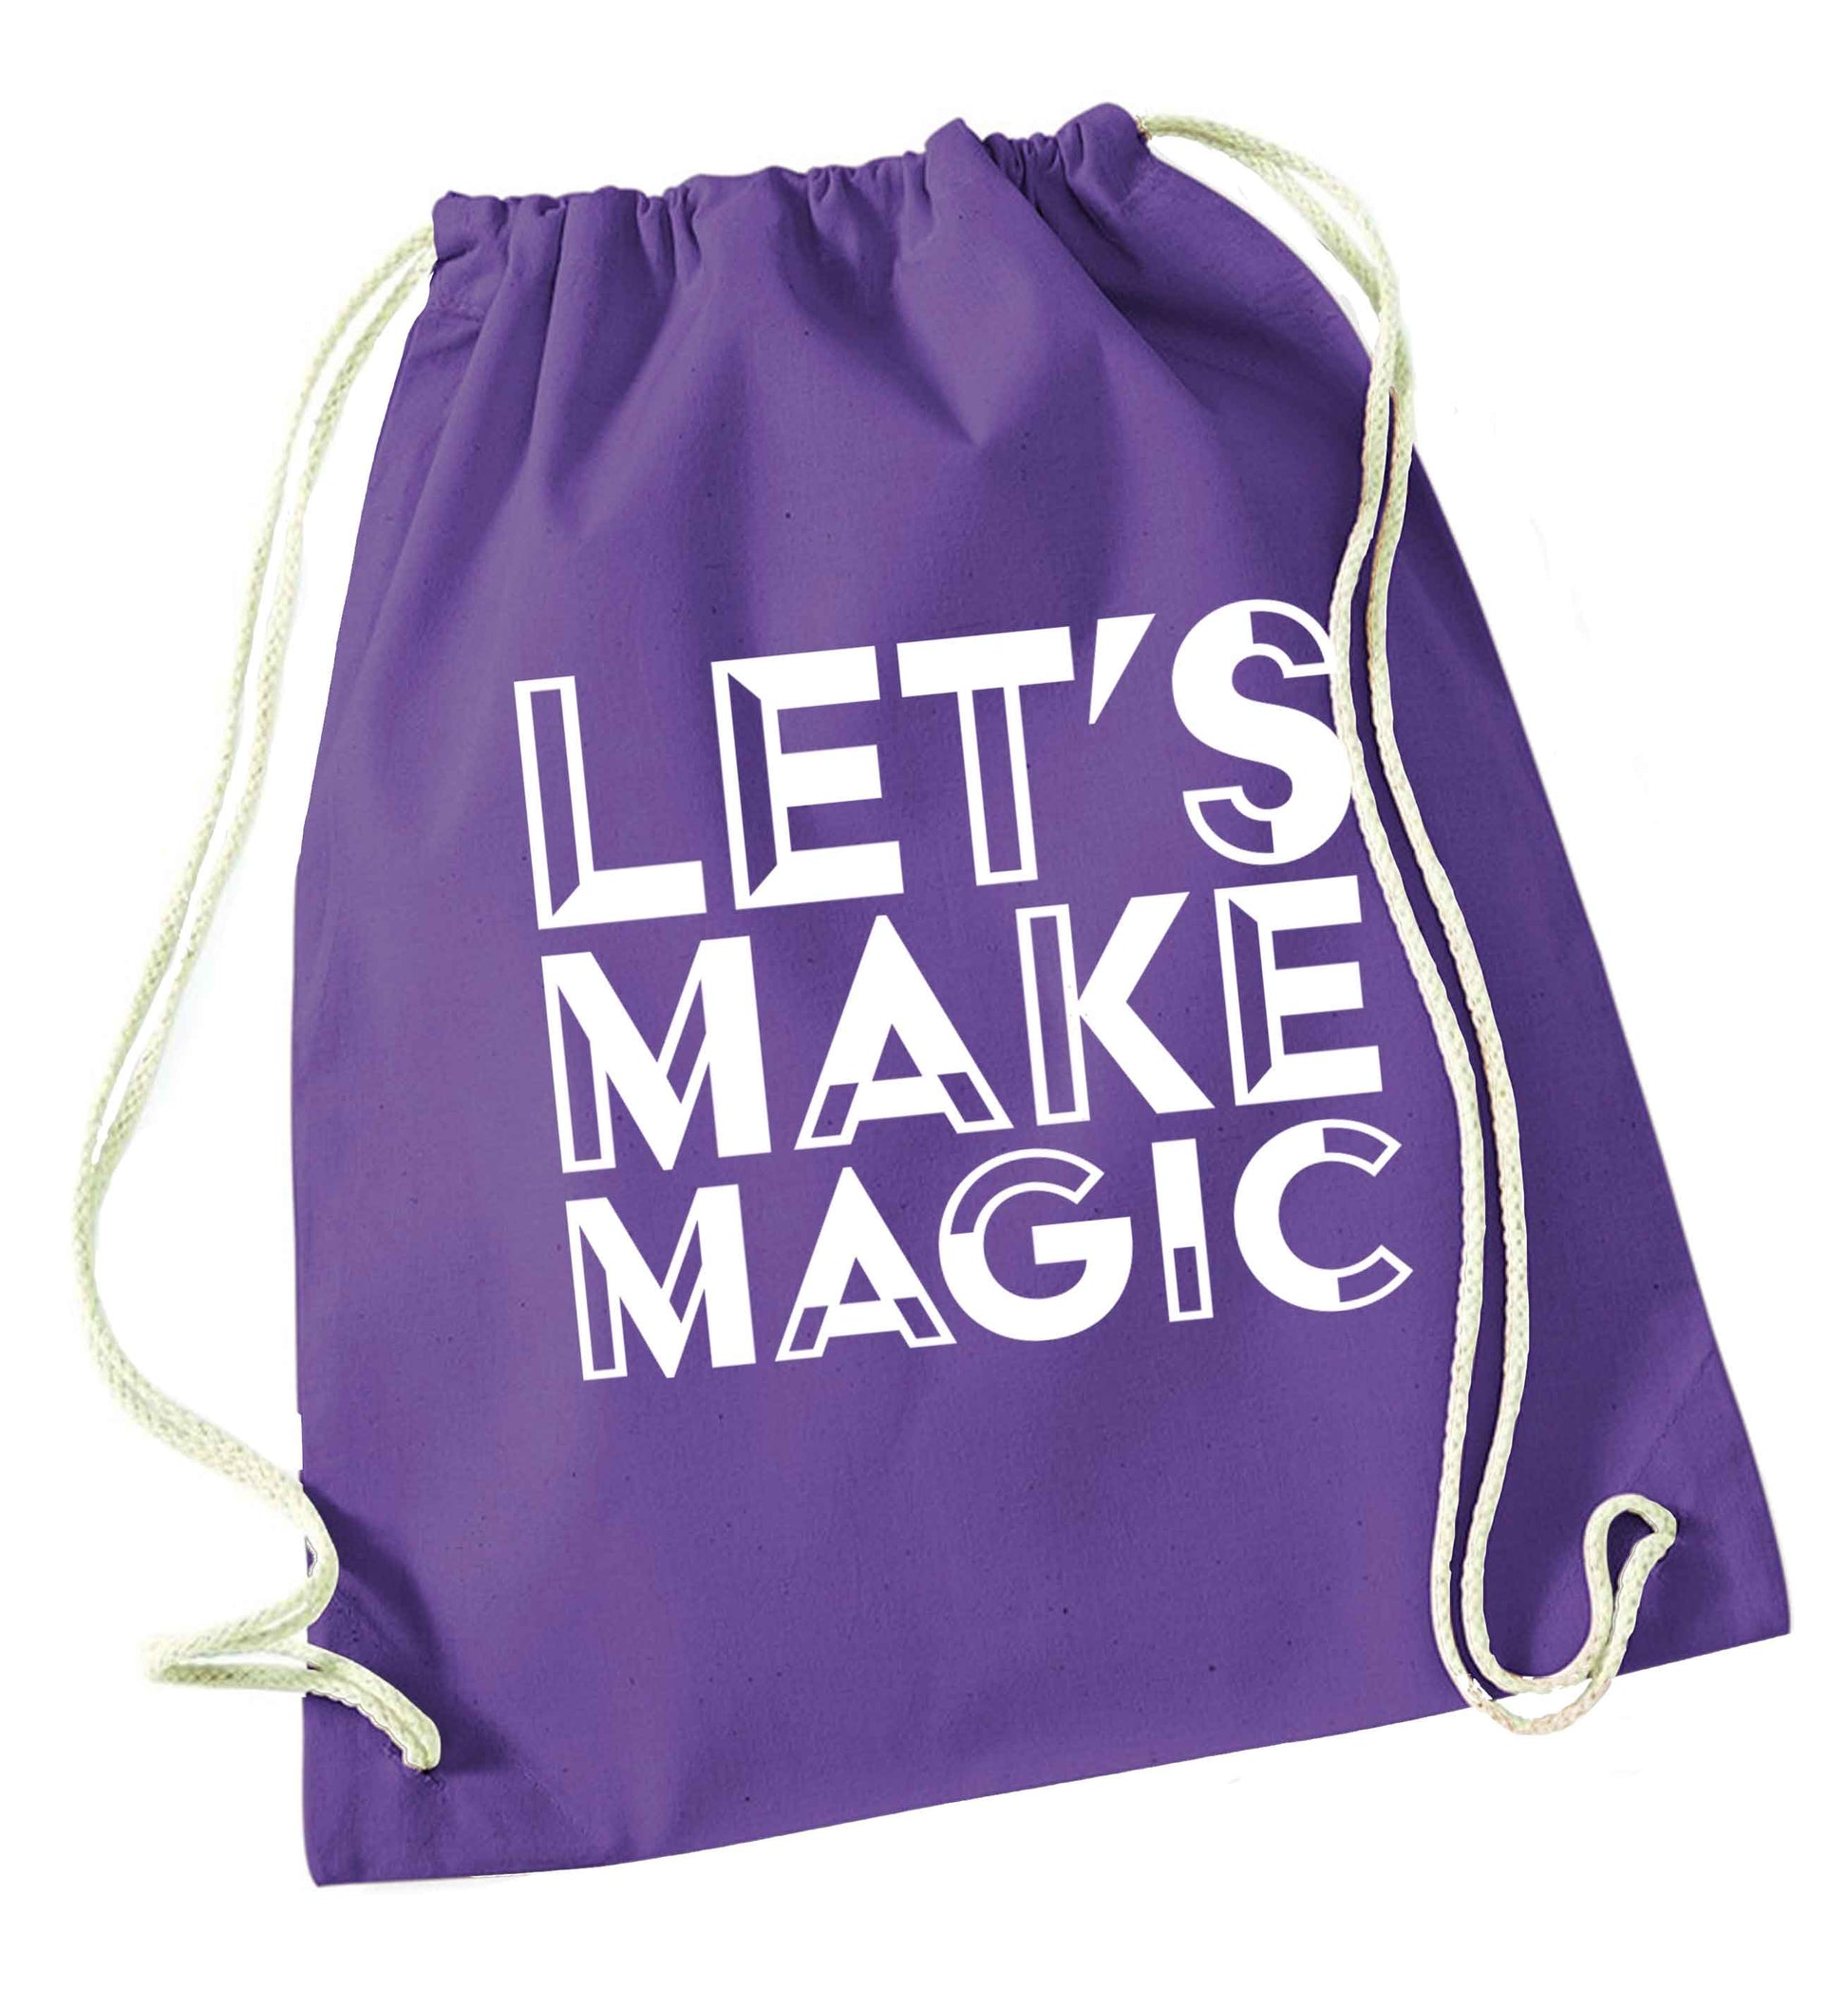 Let's make magic purple drawstring bag